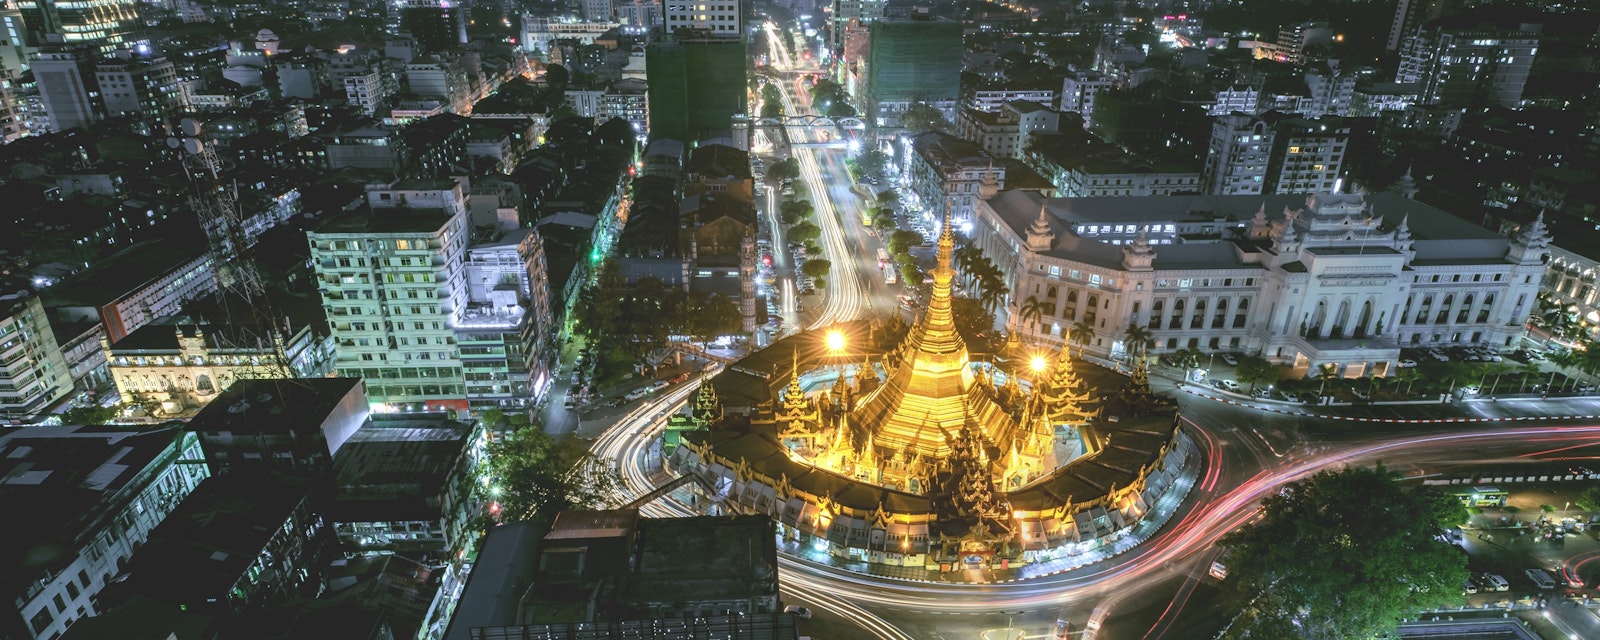 Night,Scape,Sule,Pagoda,Centre,Of,City,In,Yangon,,Myanmar,night